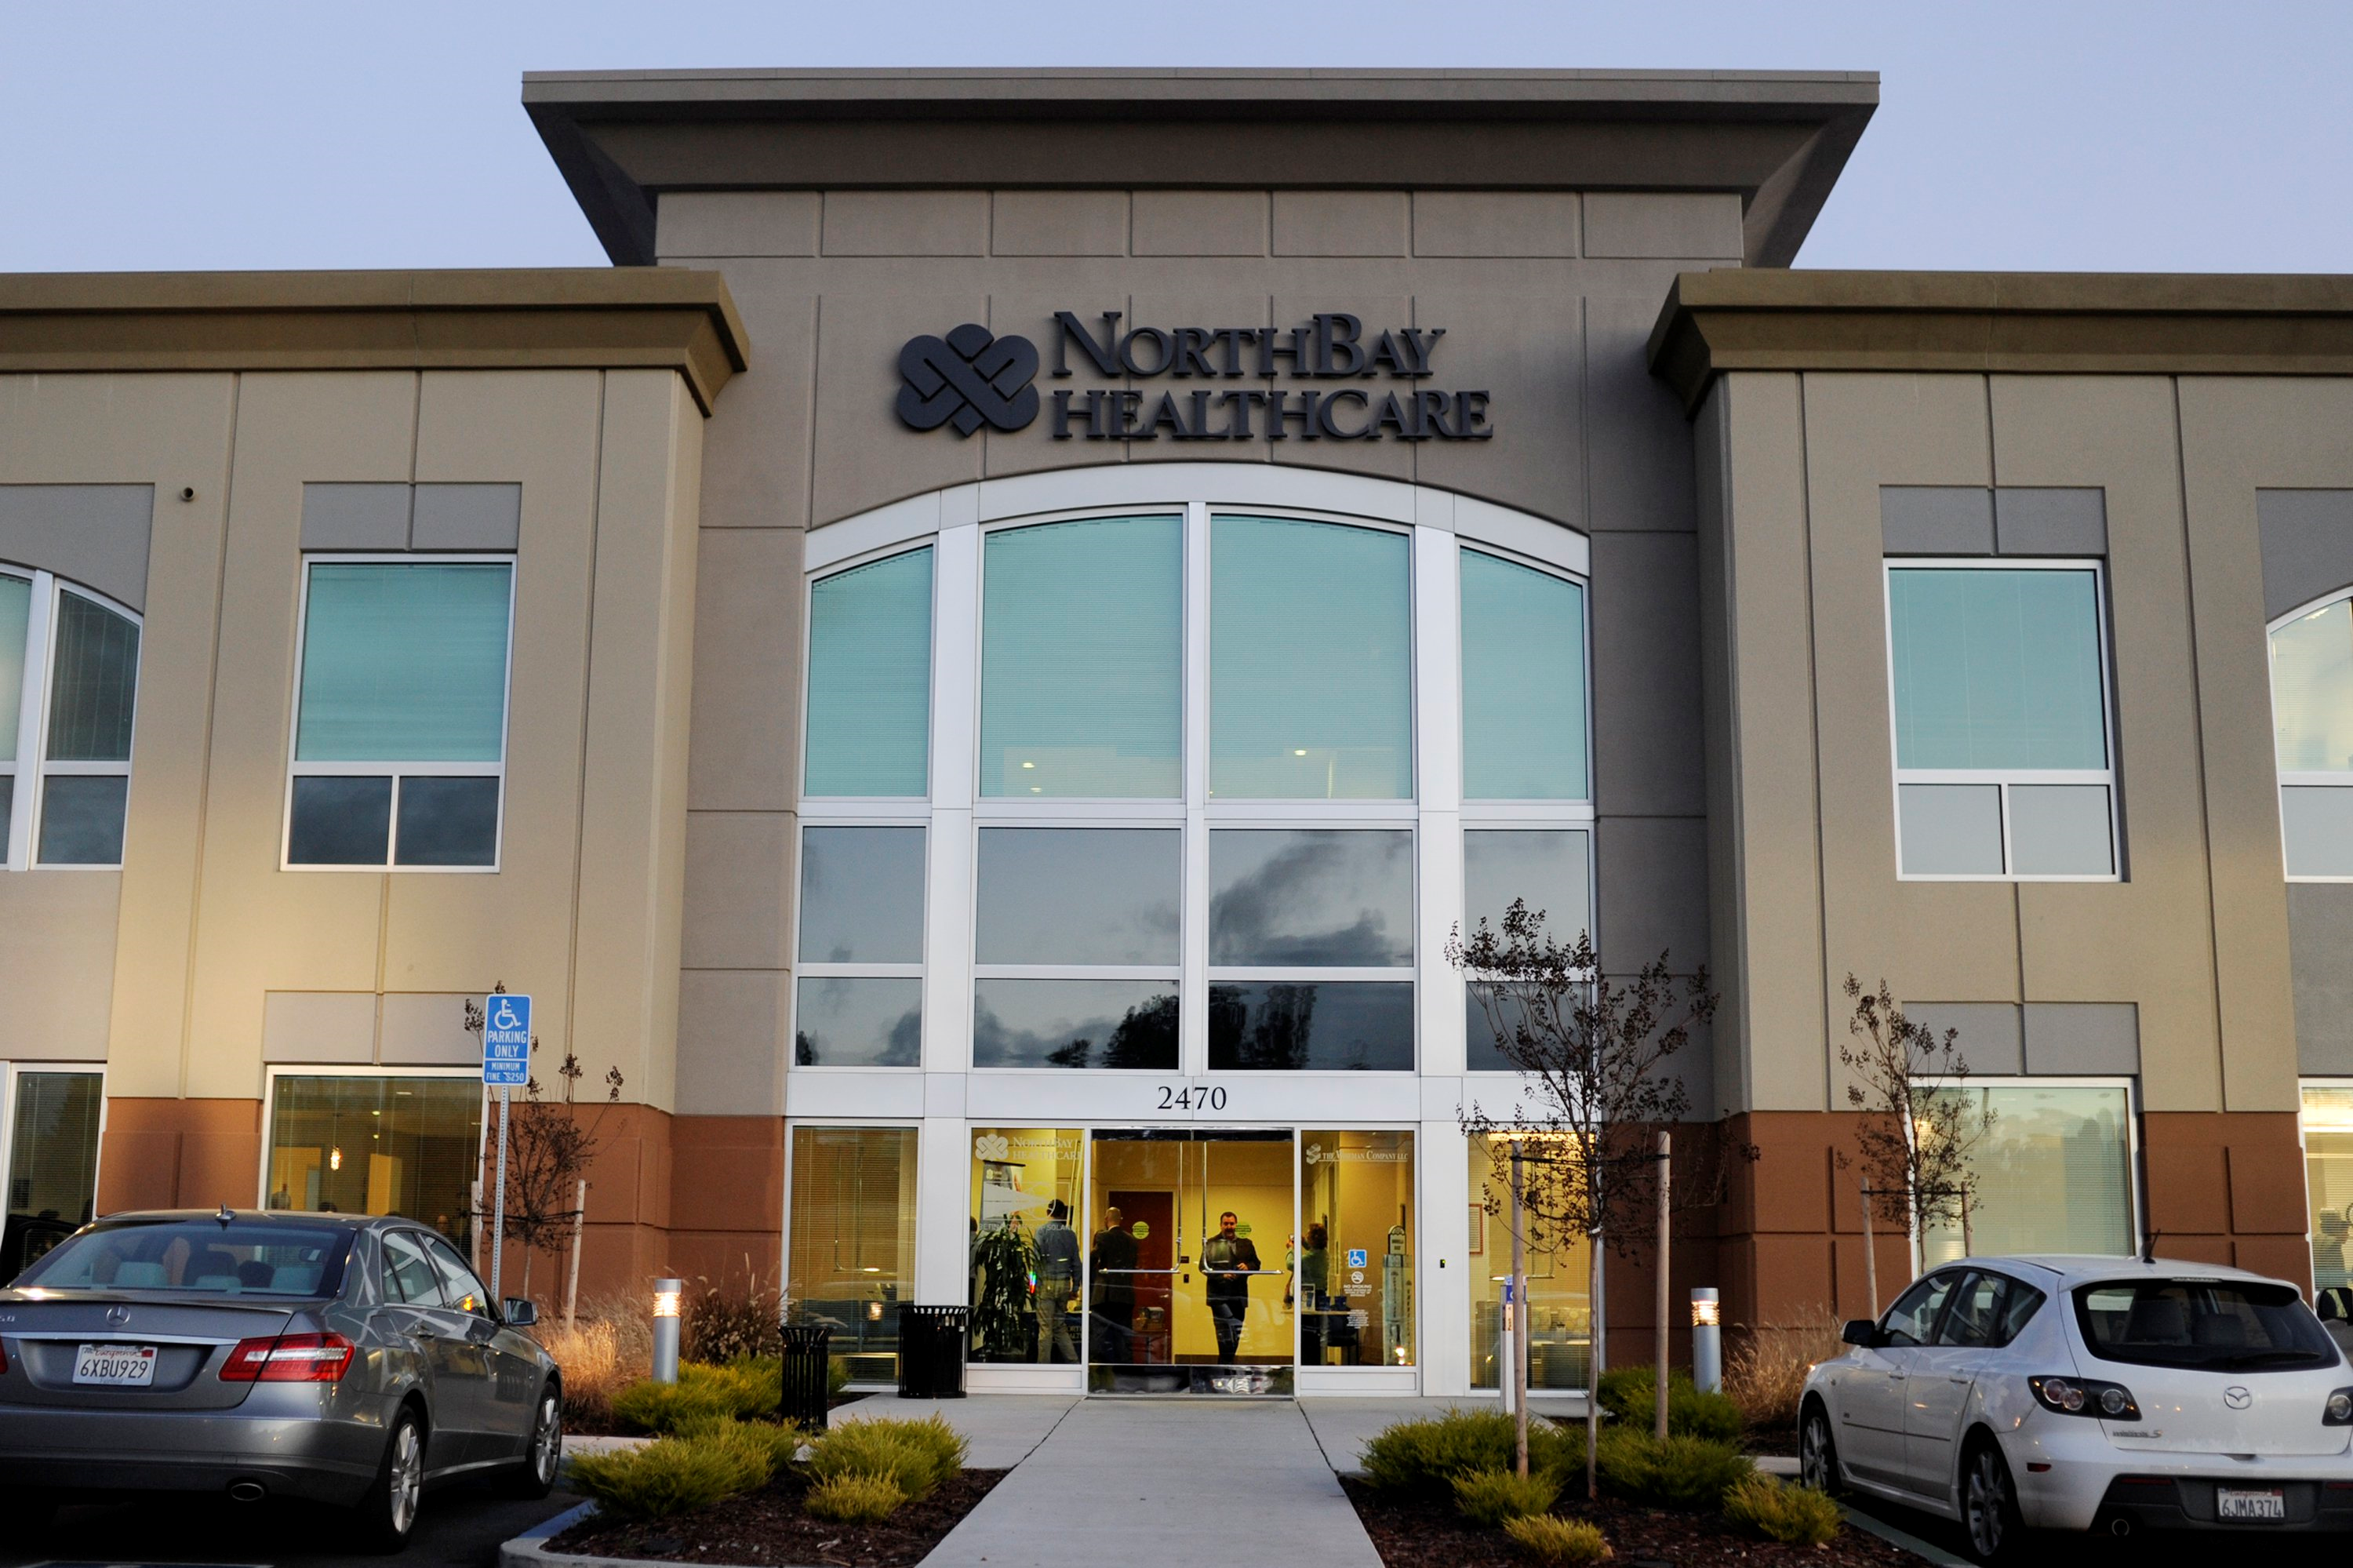 NorthBay Healthcare